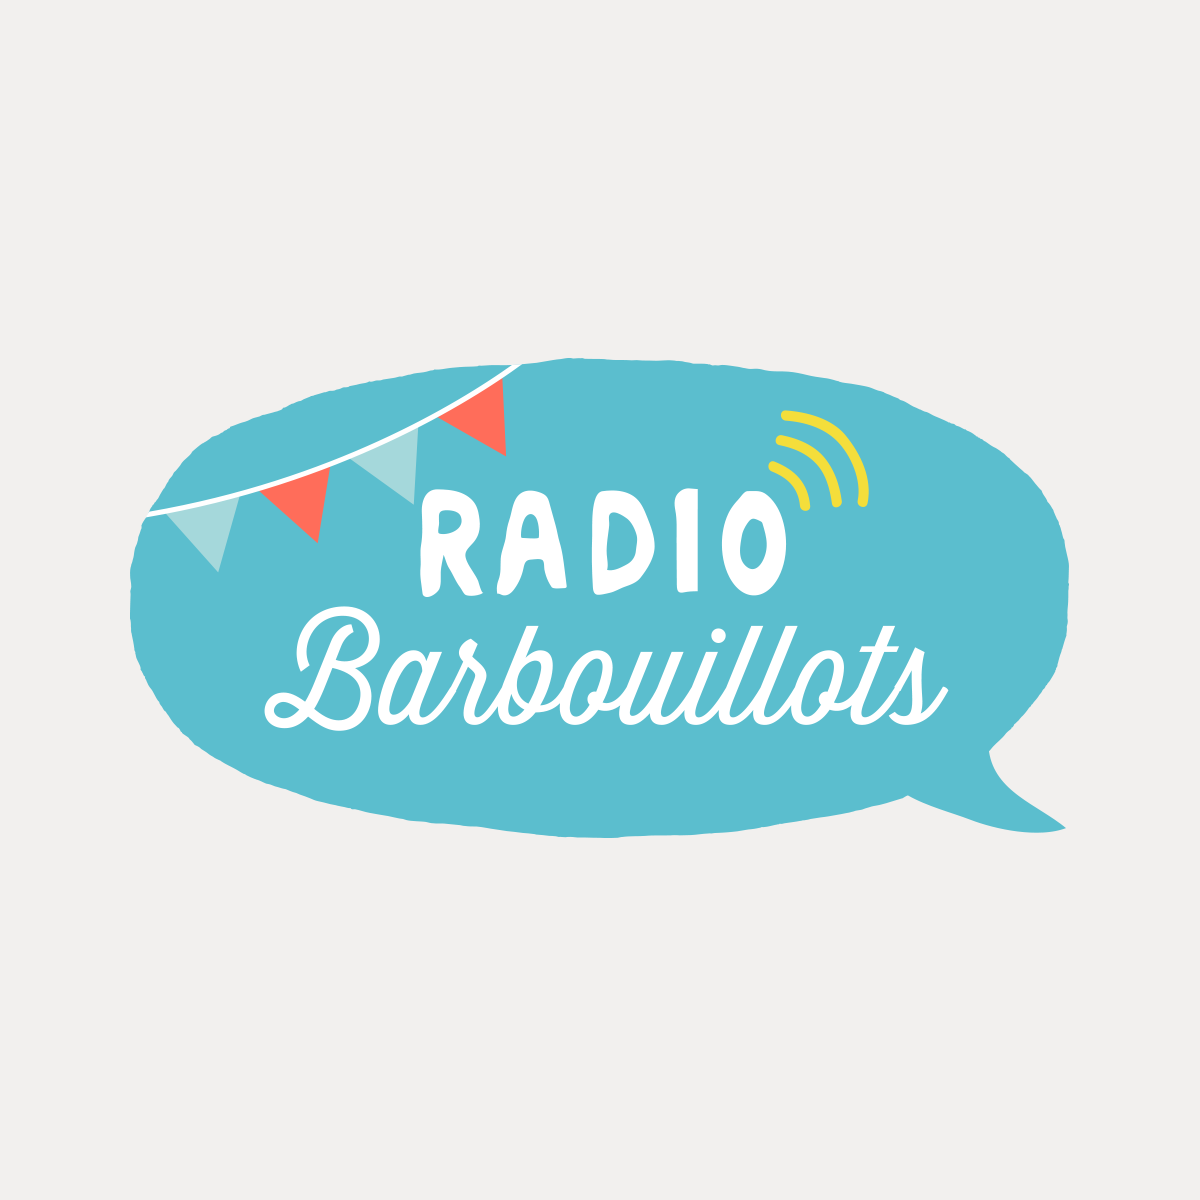 https://www.radiobarbouillots.com/wp-content/uploads/2015/05/partage-radio-barbouillots.png